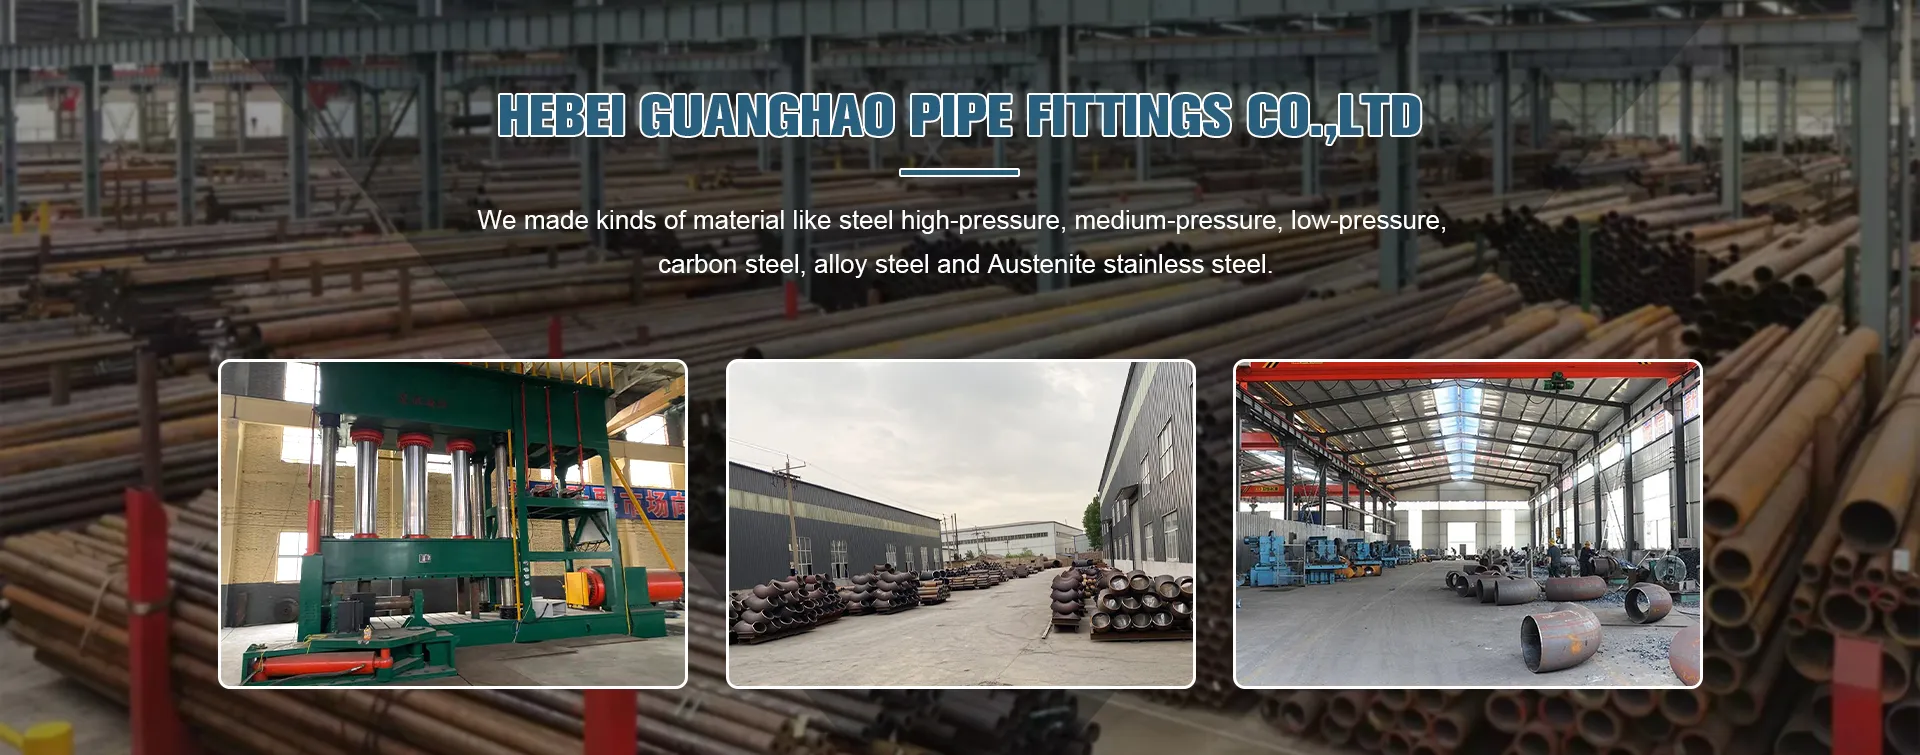 HeBei GuangHao Pipe Fittings Co., Ltd